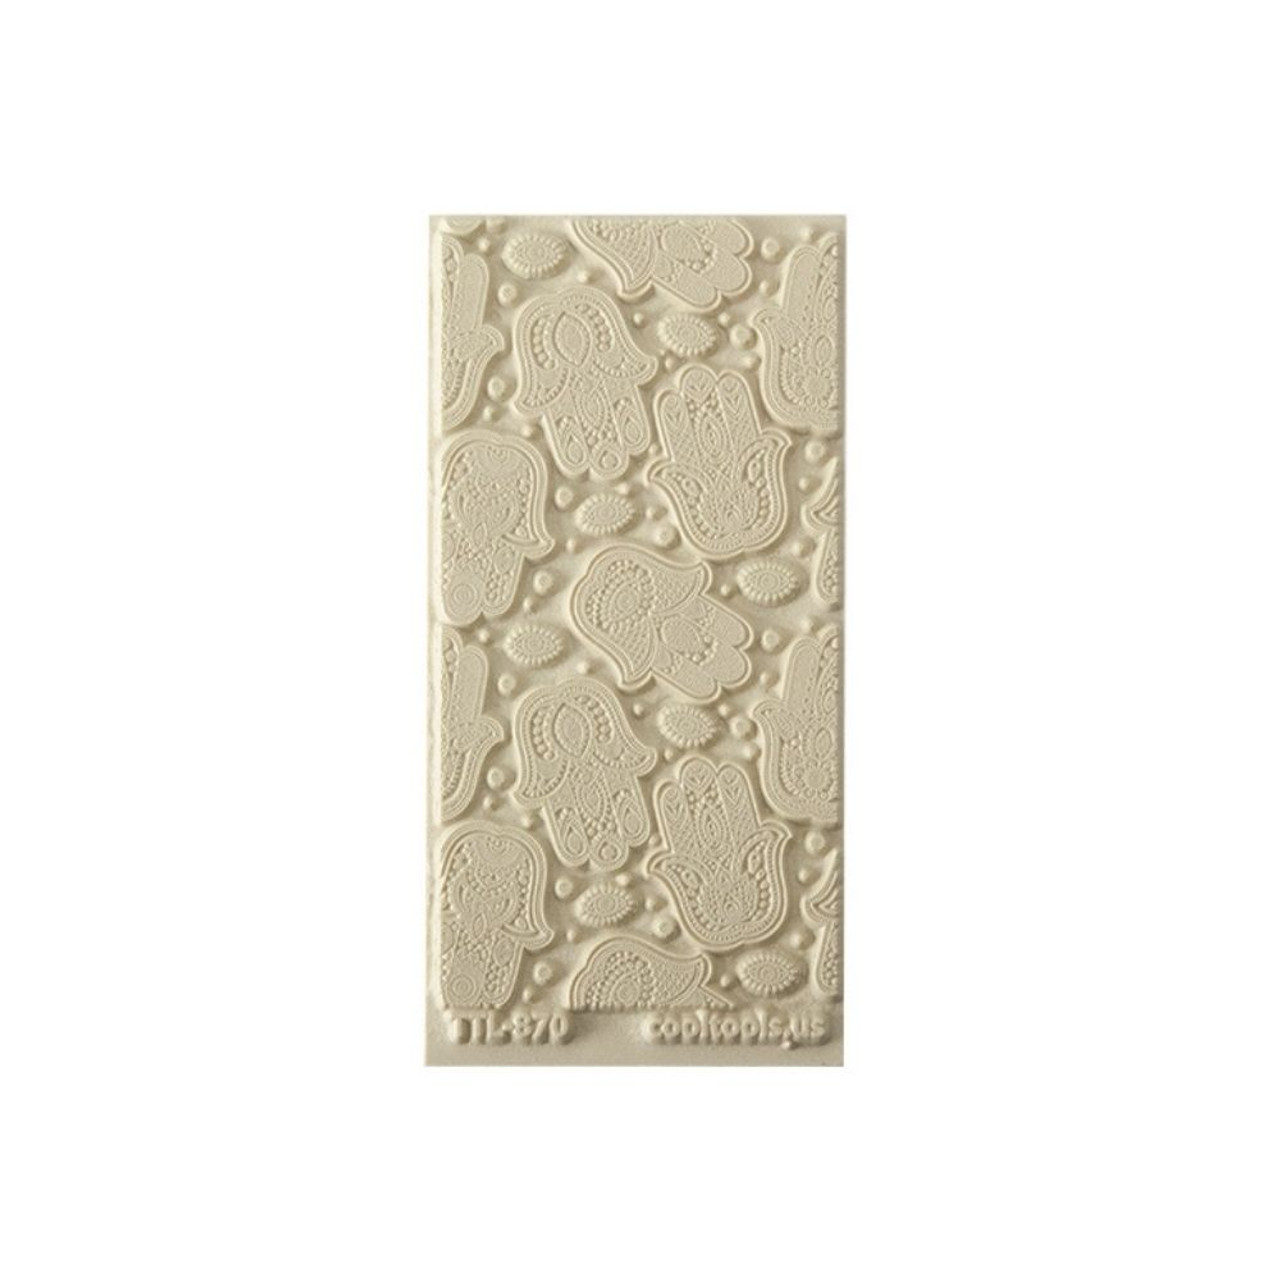 Texture Tile - Hamsas 103-TTL-870